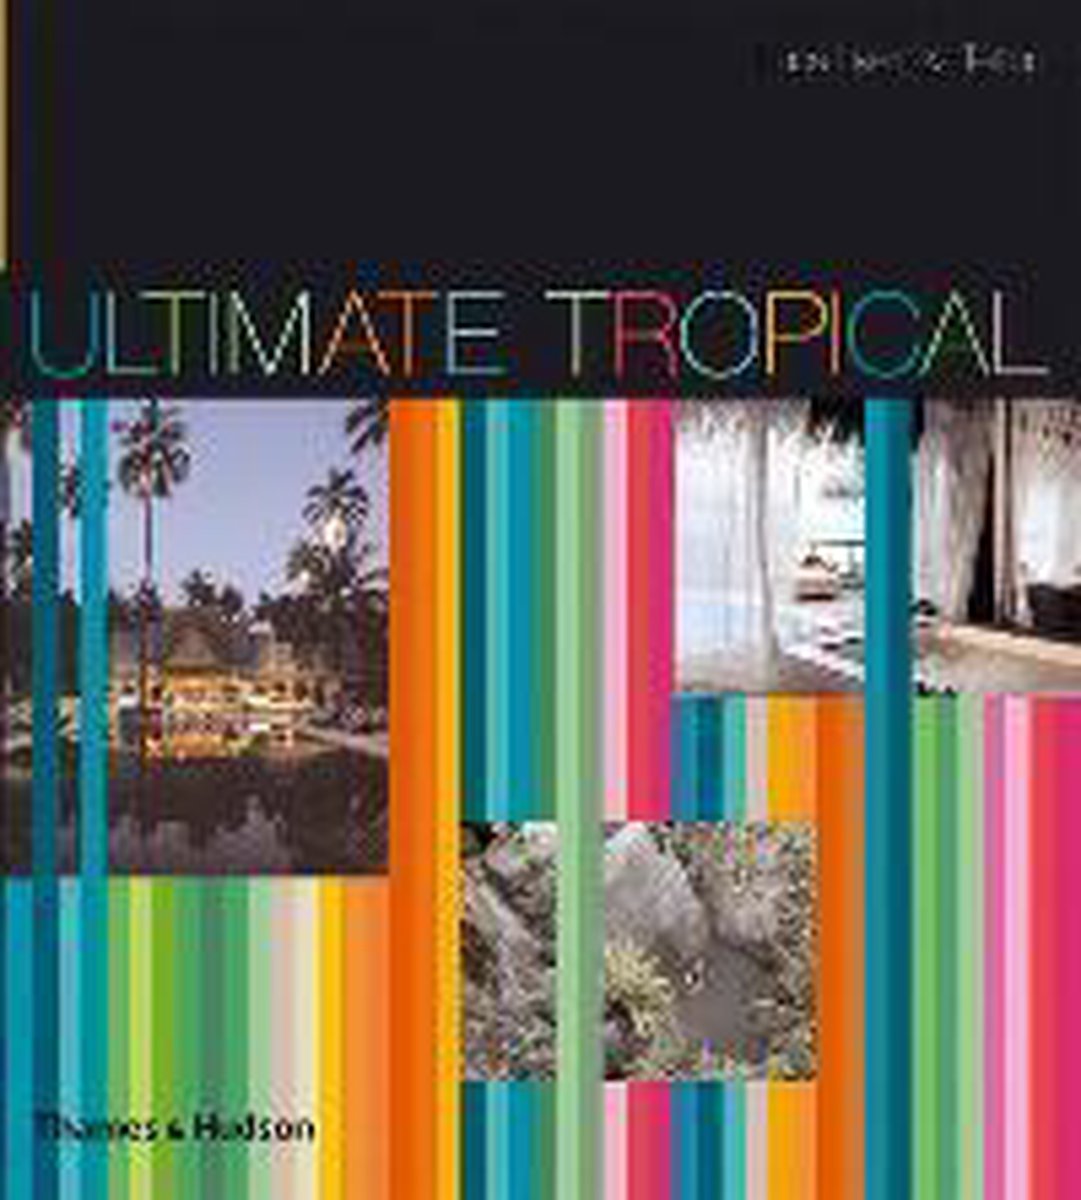 Ultimate Tropical